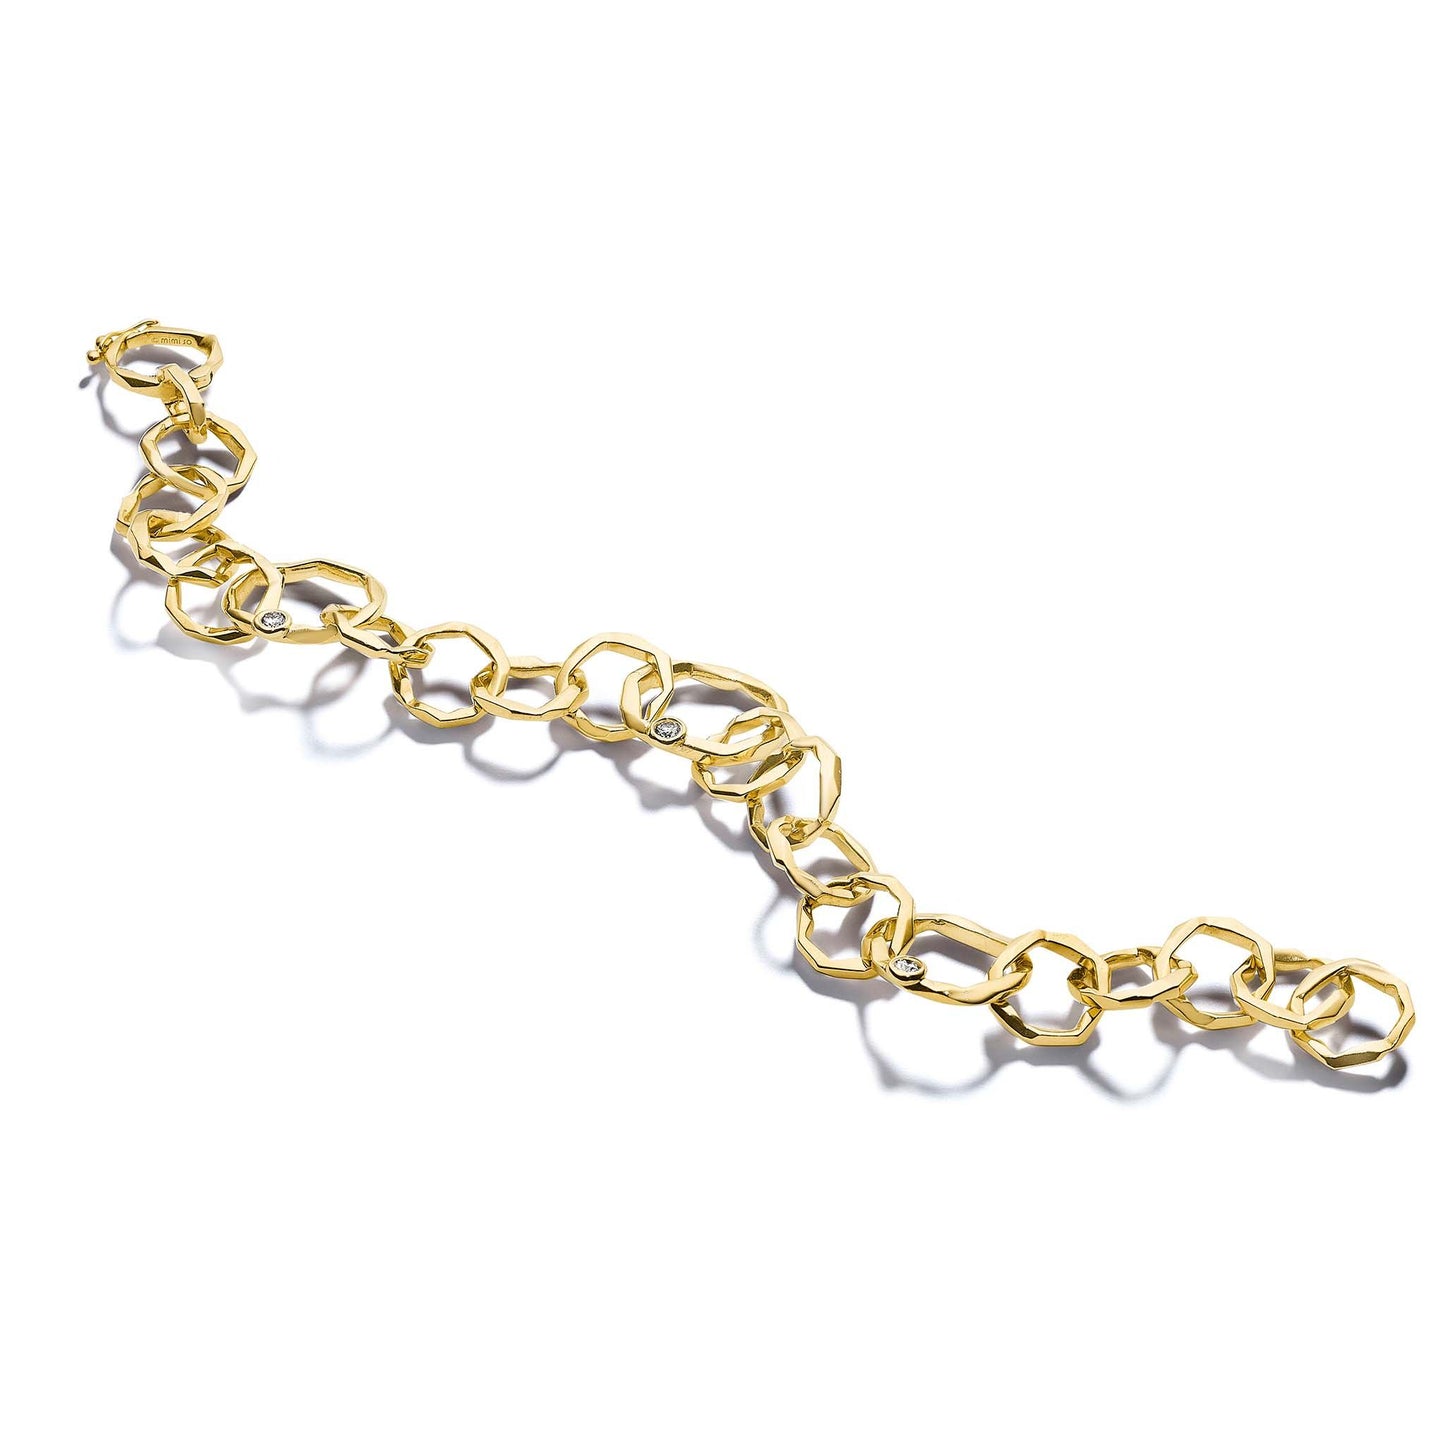 Jackson Faceted Chain Link Bracelet